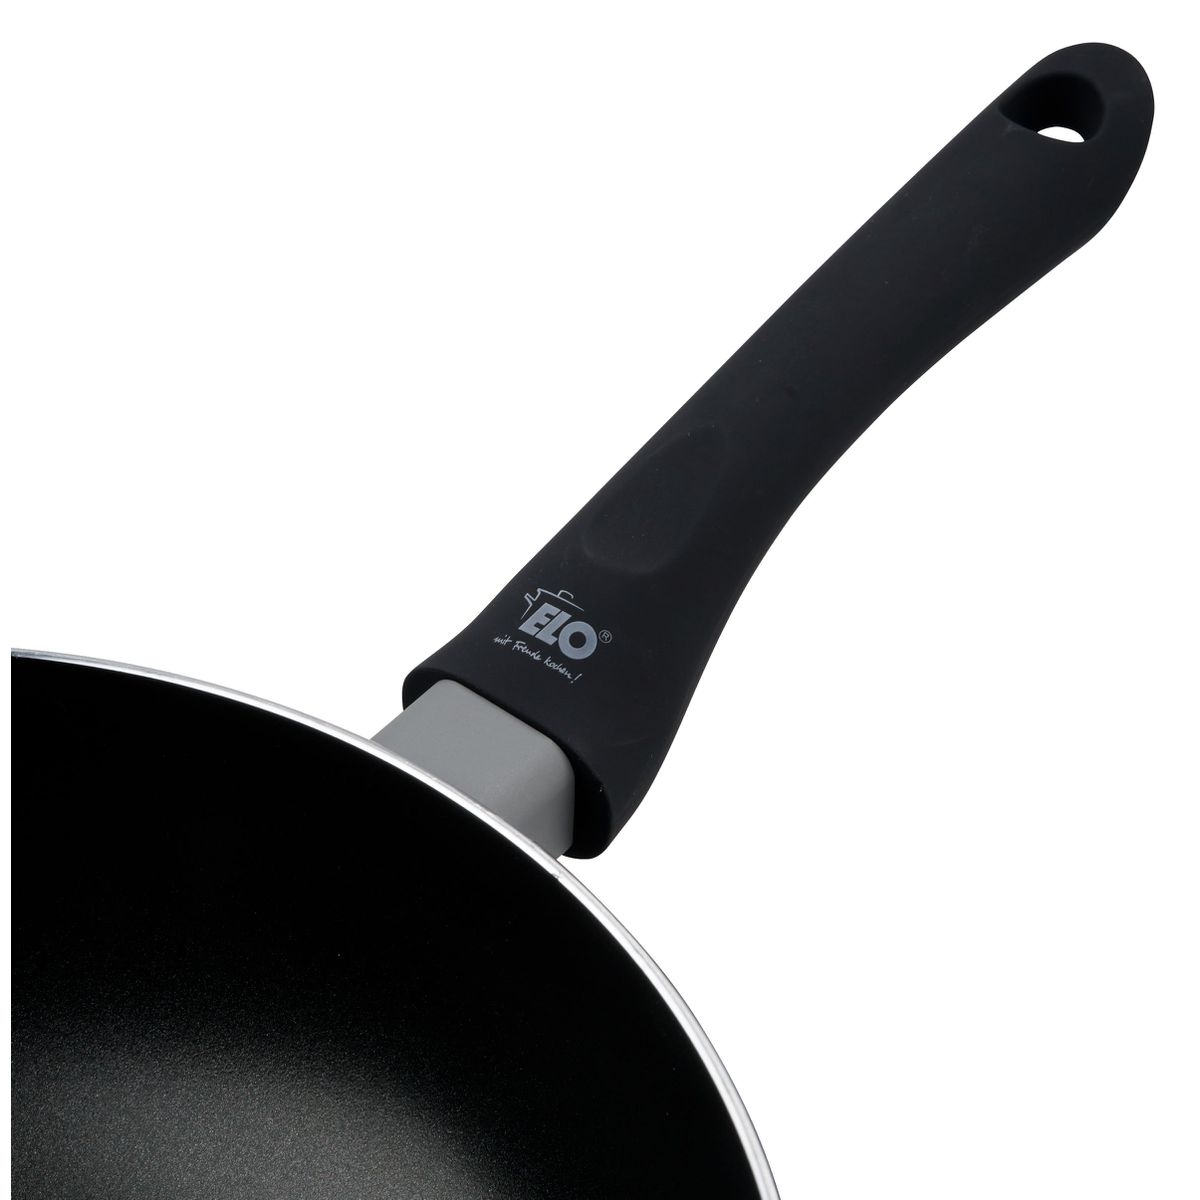 Lot de 2 woks de cuisine de 20 cm et 28 cm en aluminium pressé Elo Smart Life